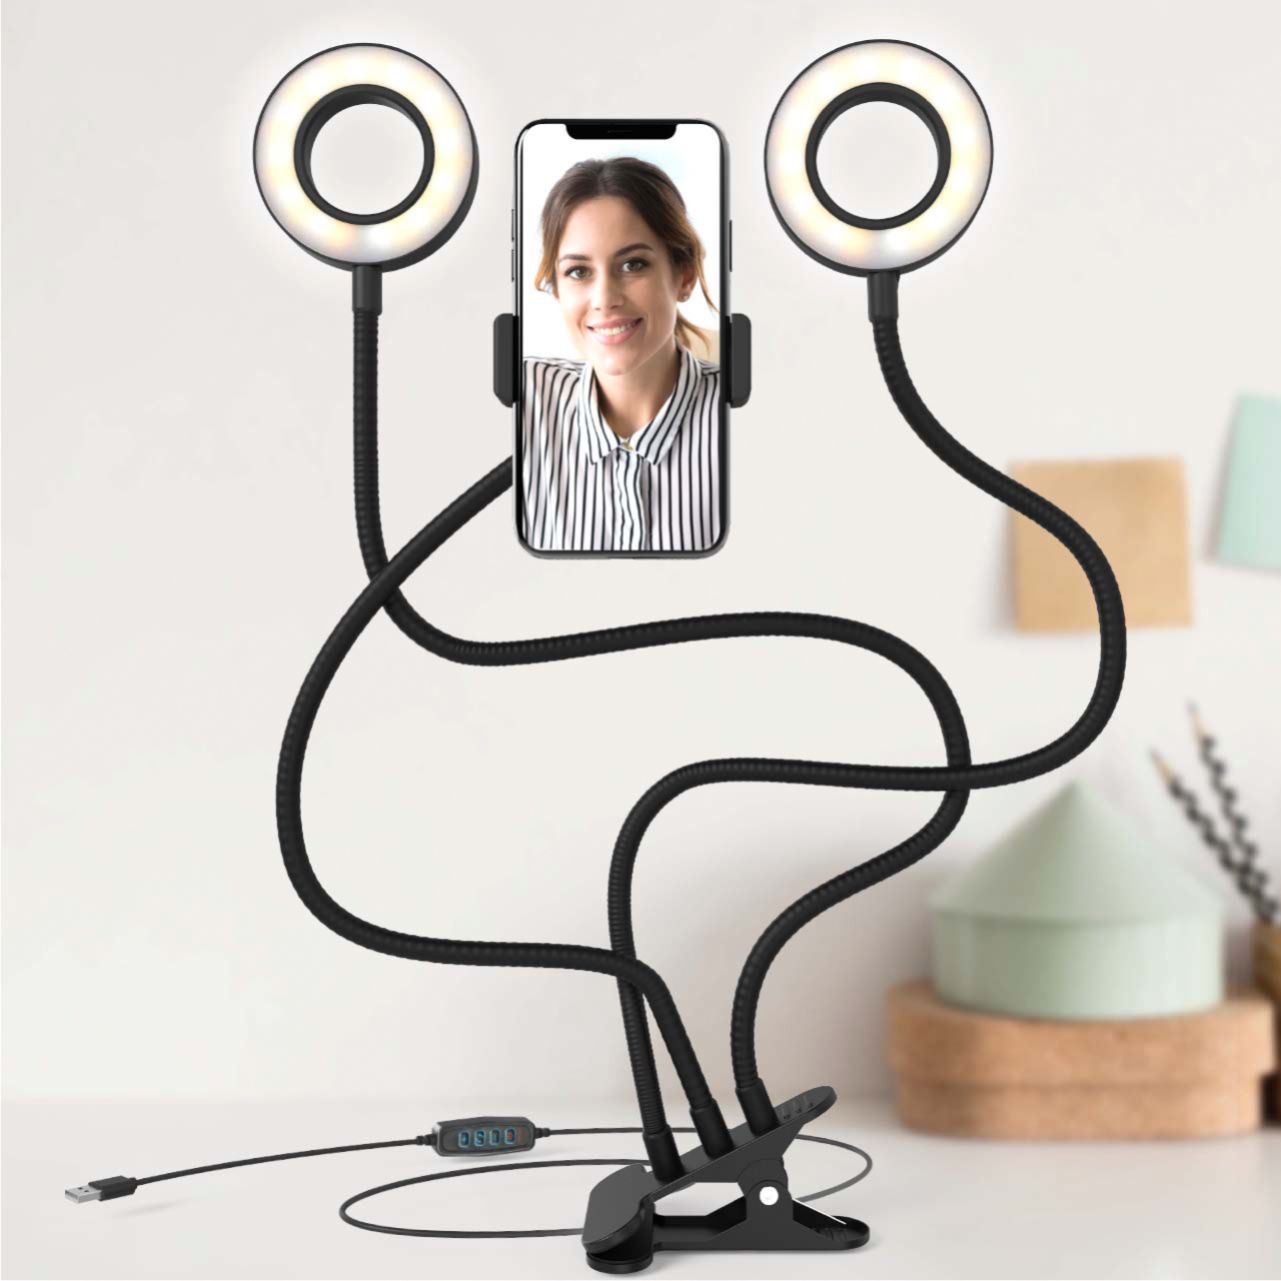 Bower Studio Ring Light with Desk Clamp Black BB-RLC6W - Best Buy